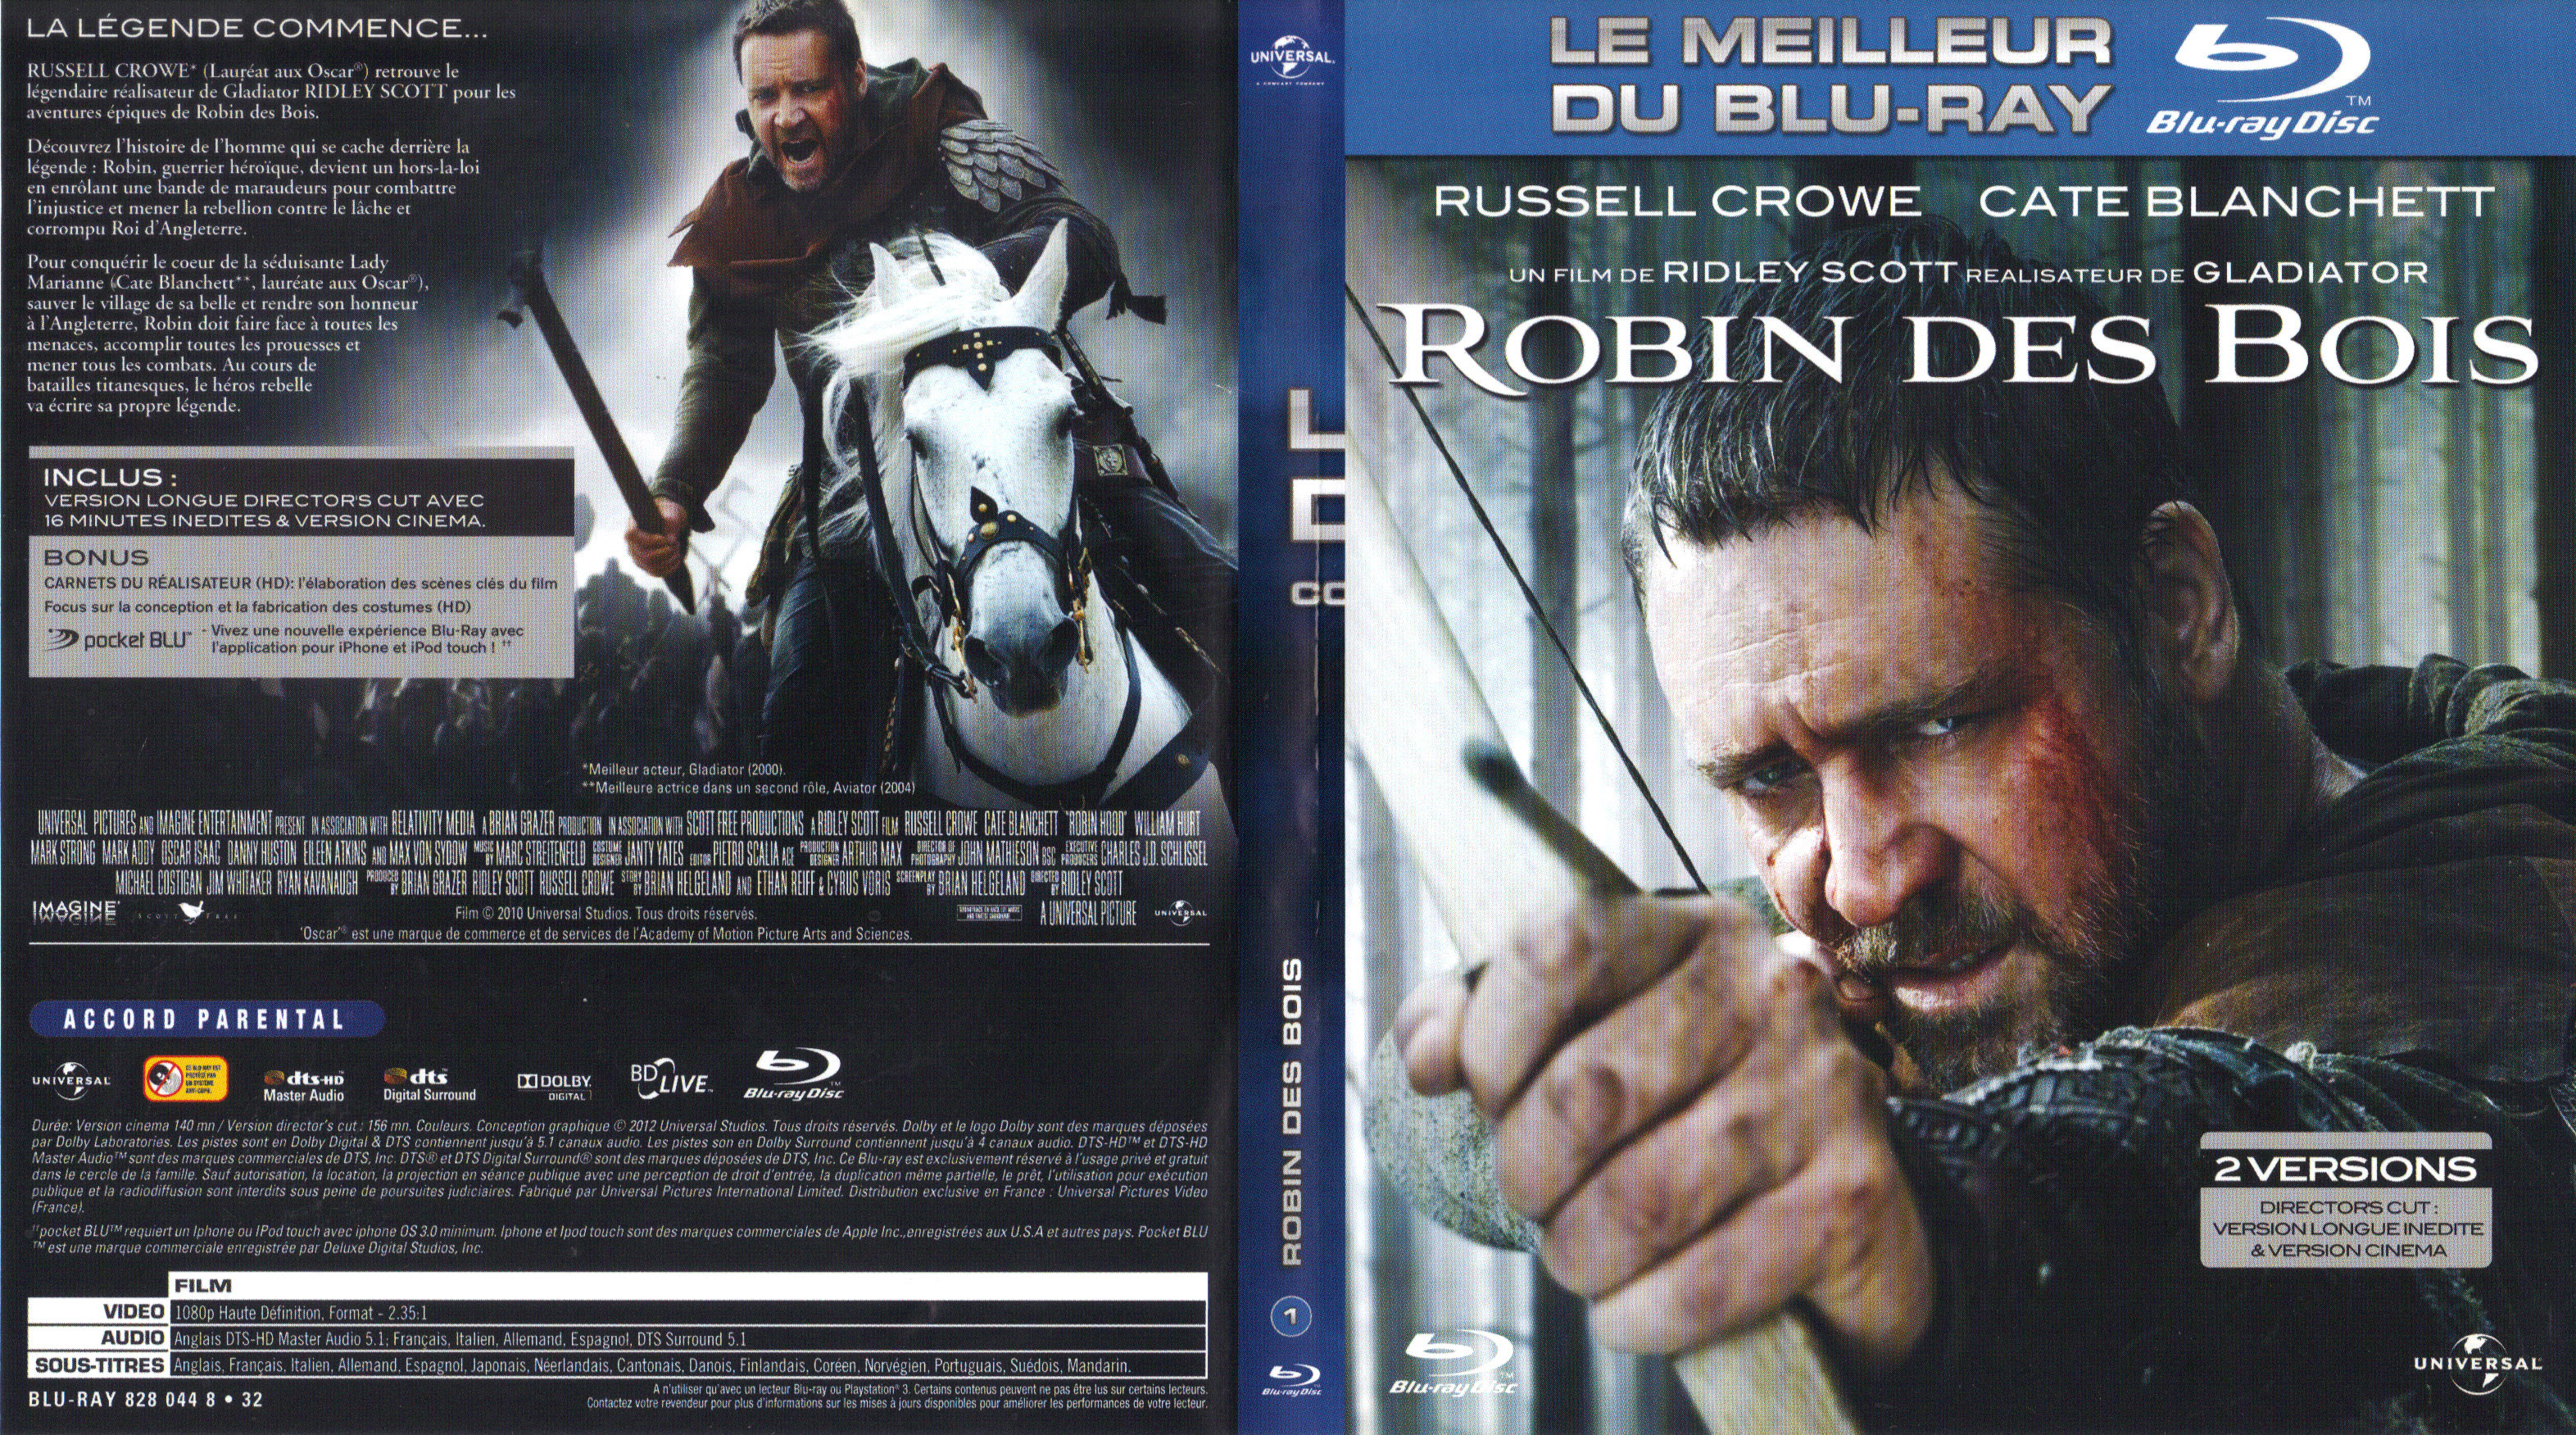 Jaquette DVD Robin des bois (2010) (BLU-RAY)